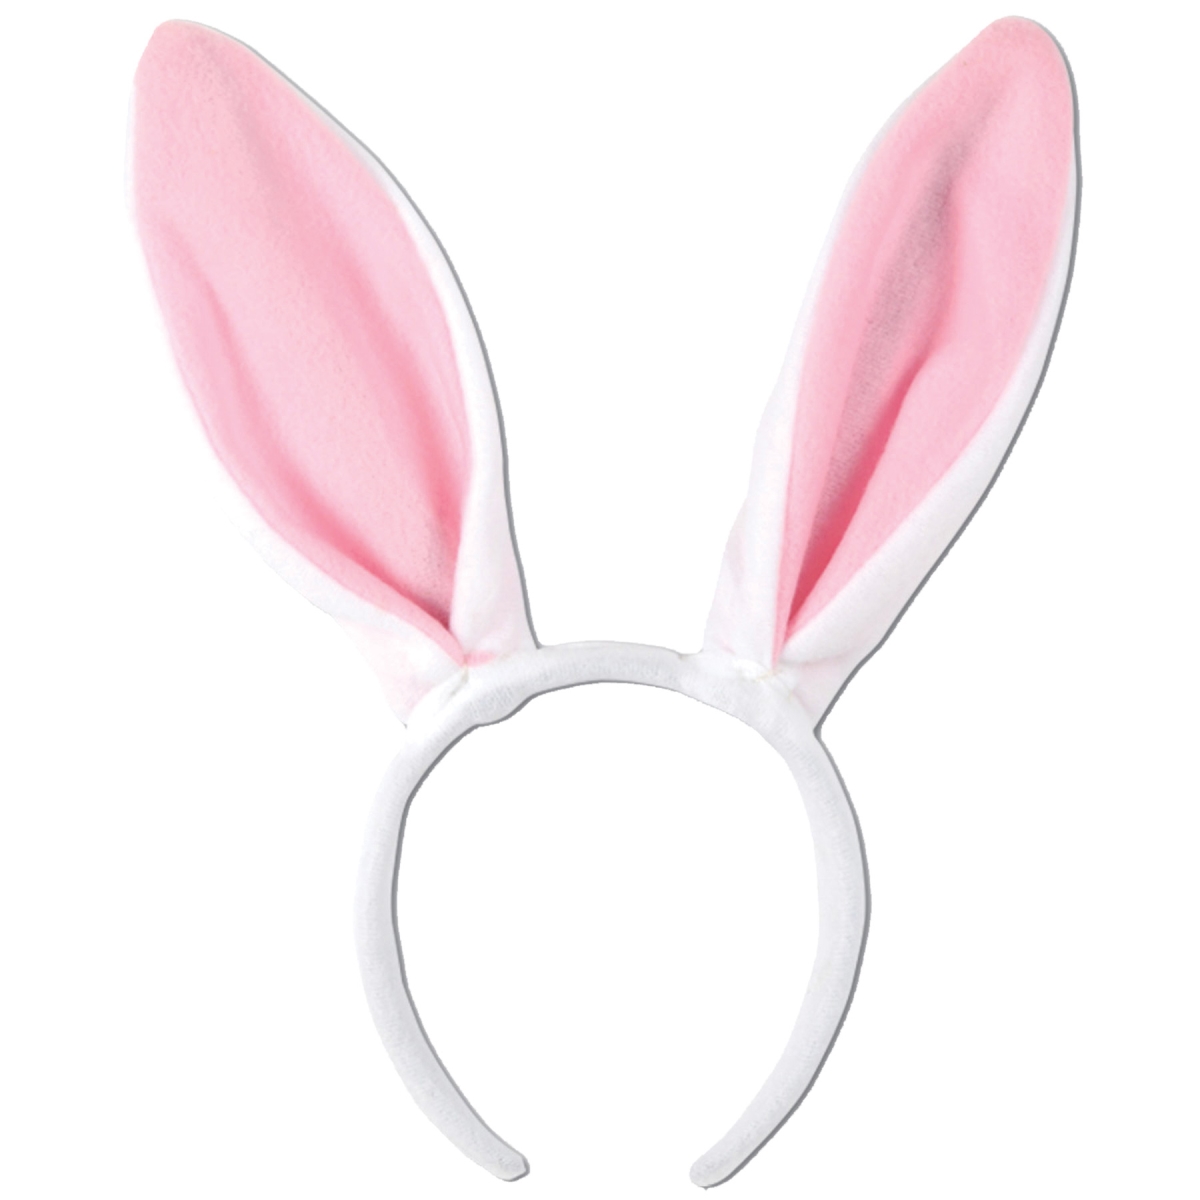 Bg40760 Bunny Ears White With Pink Lining Headband